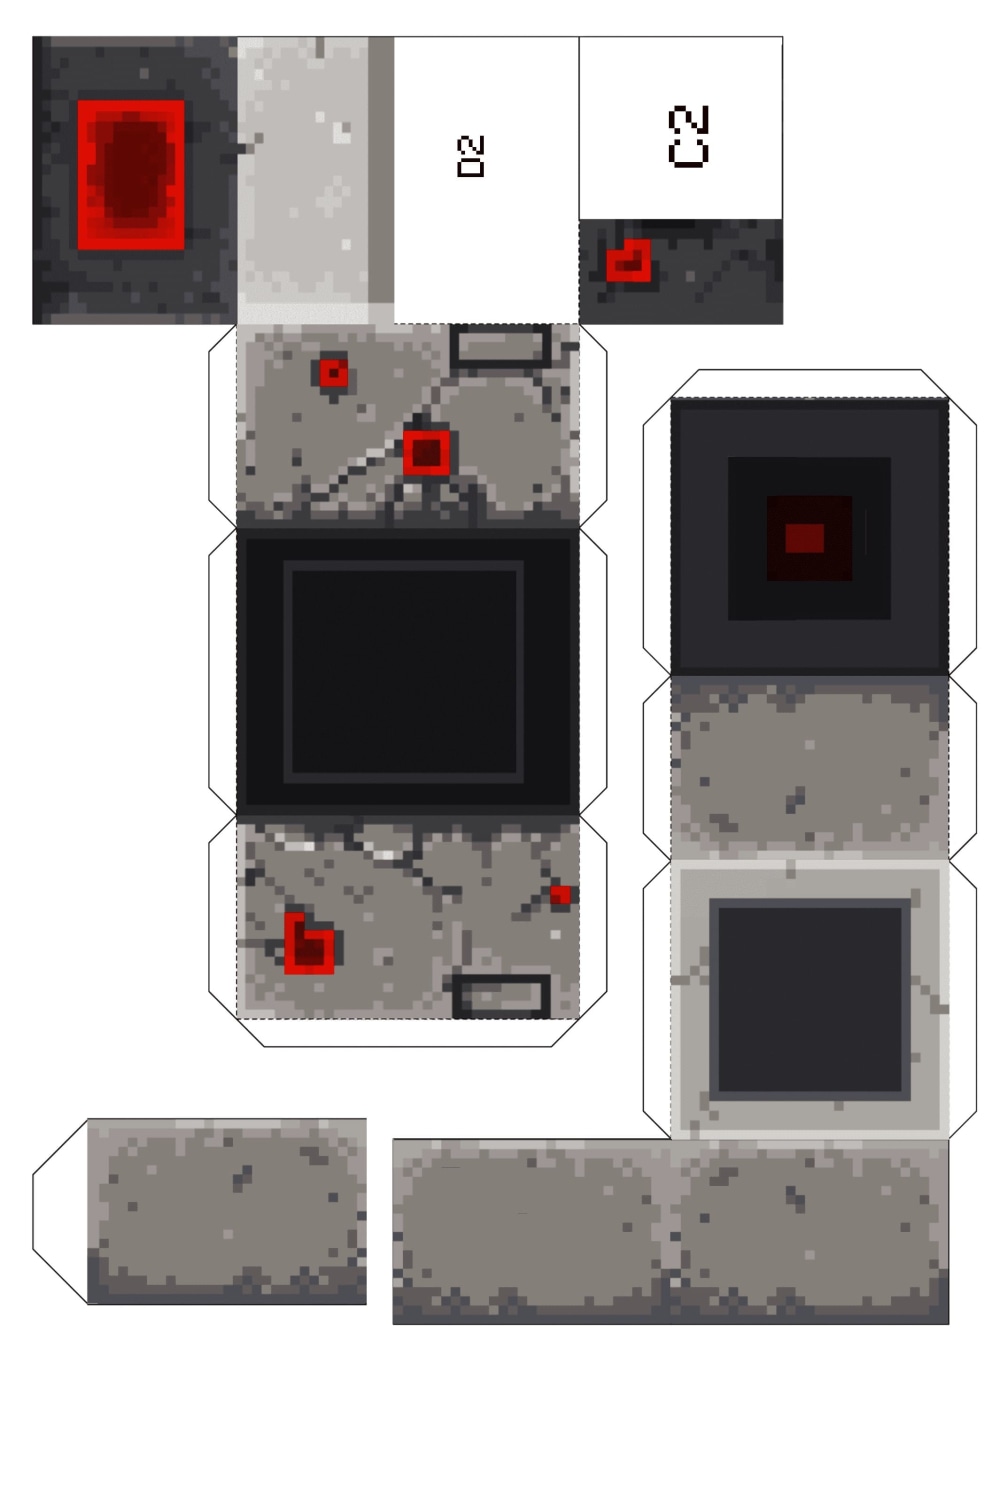 Pixel Papercraft Redstone Monstrosity (Mini Boss from Minecraft Dungeons)